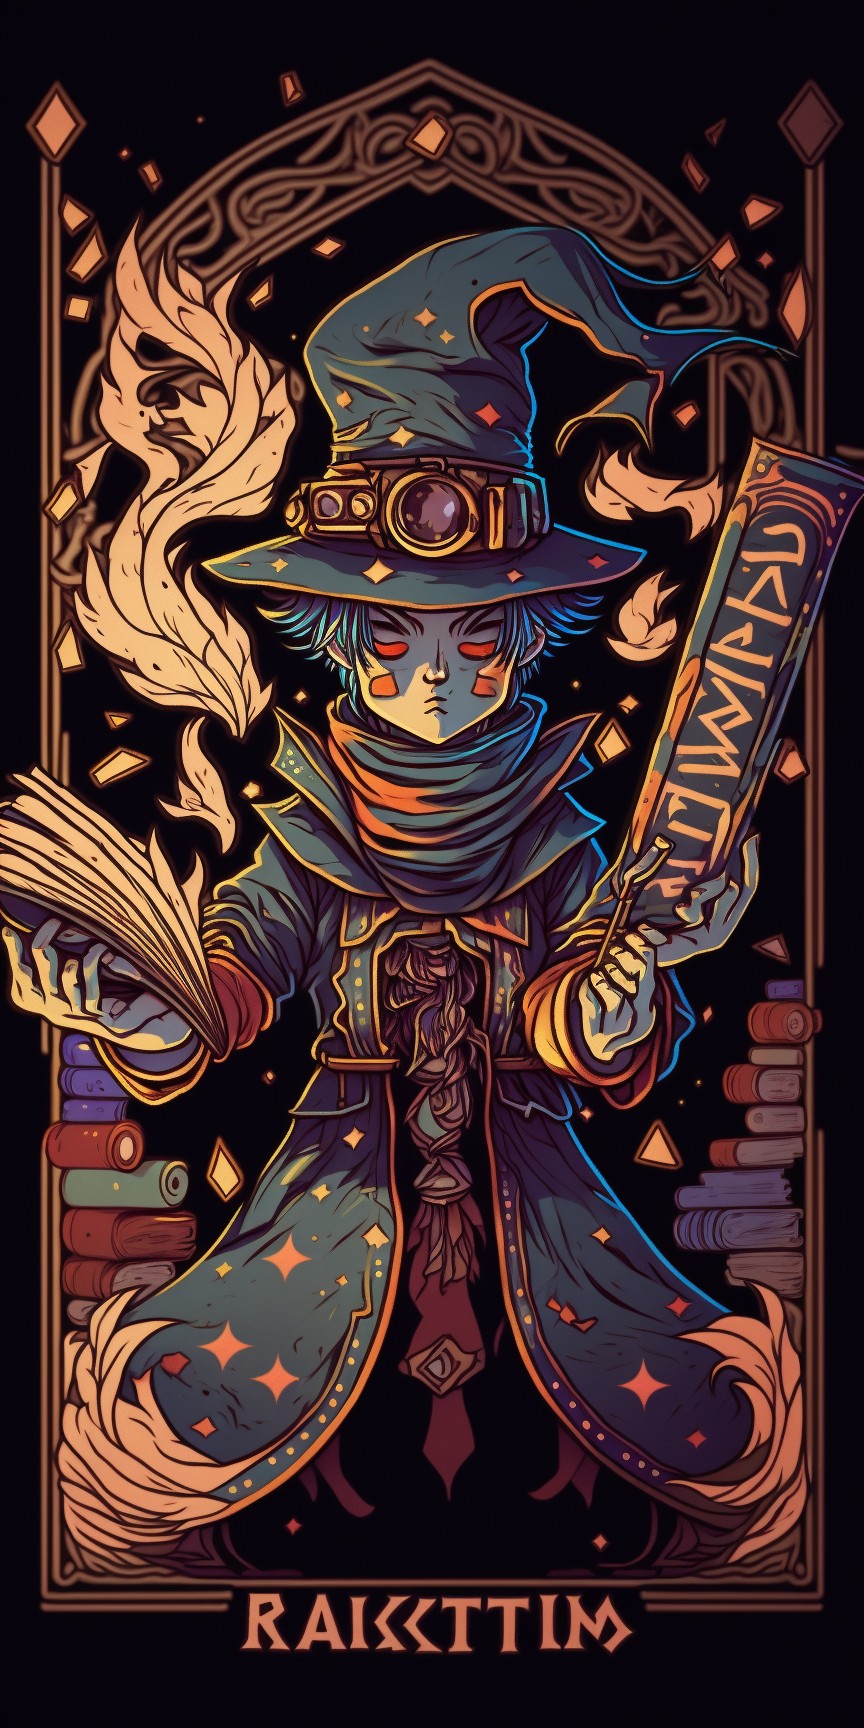 Sorcerer in tarot style